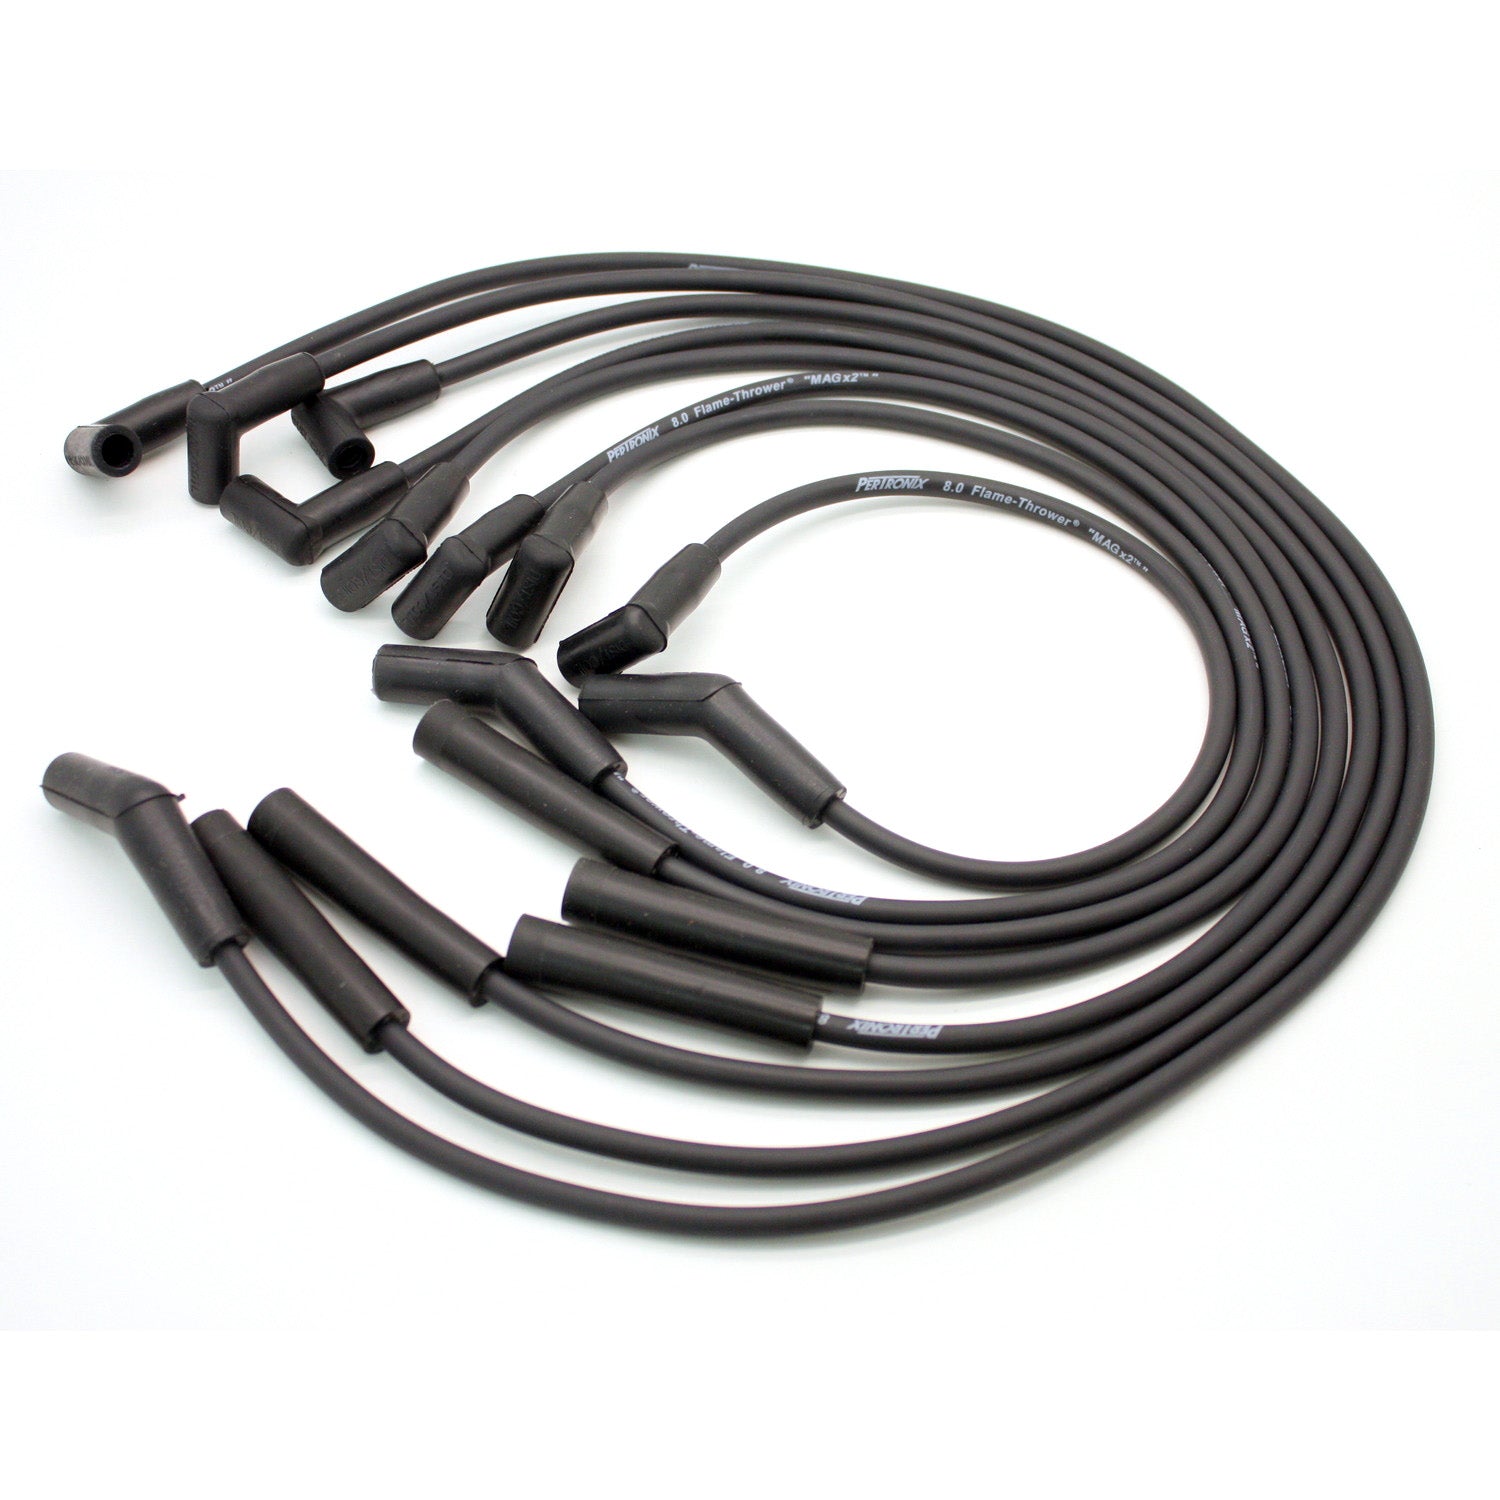 PerTronix 808201 Flame-Thrower Spark Plug Wires 8 cyl 8mm GM HEI Custom Kit Black